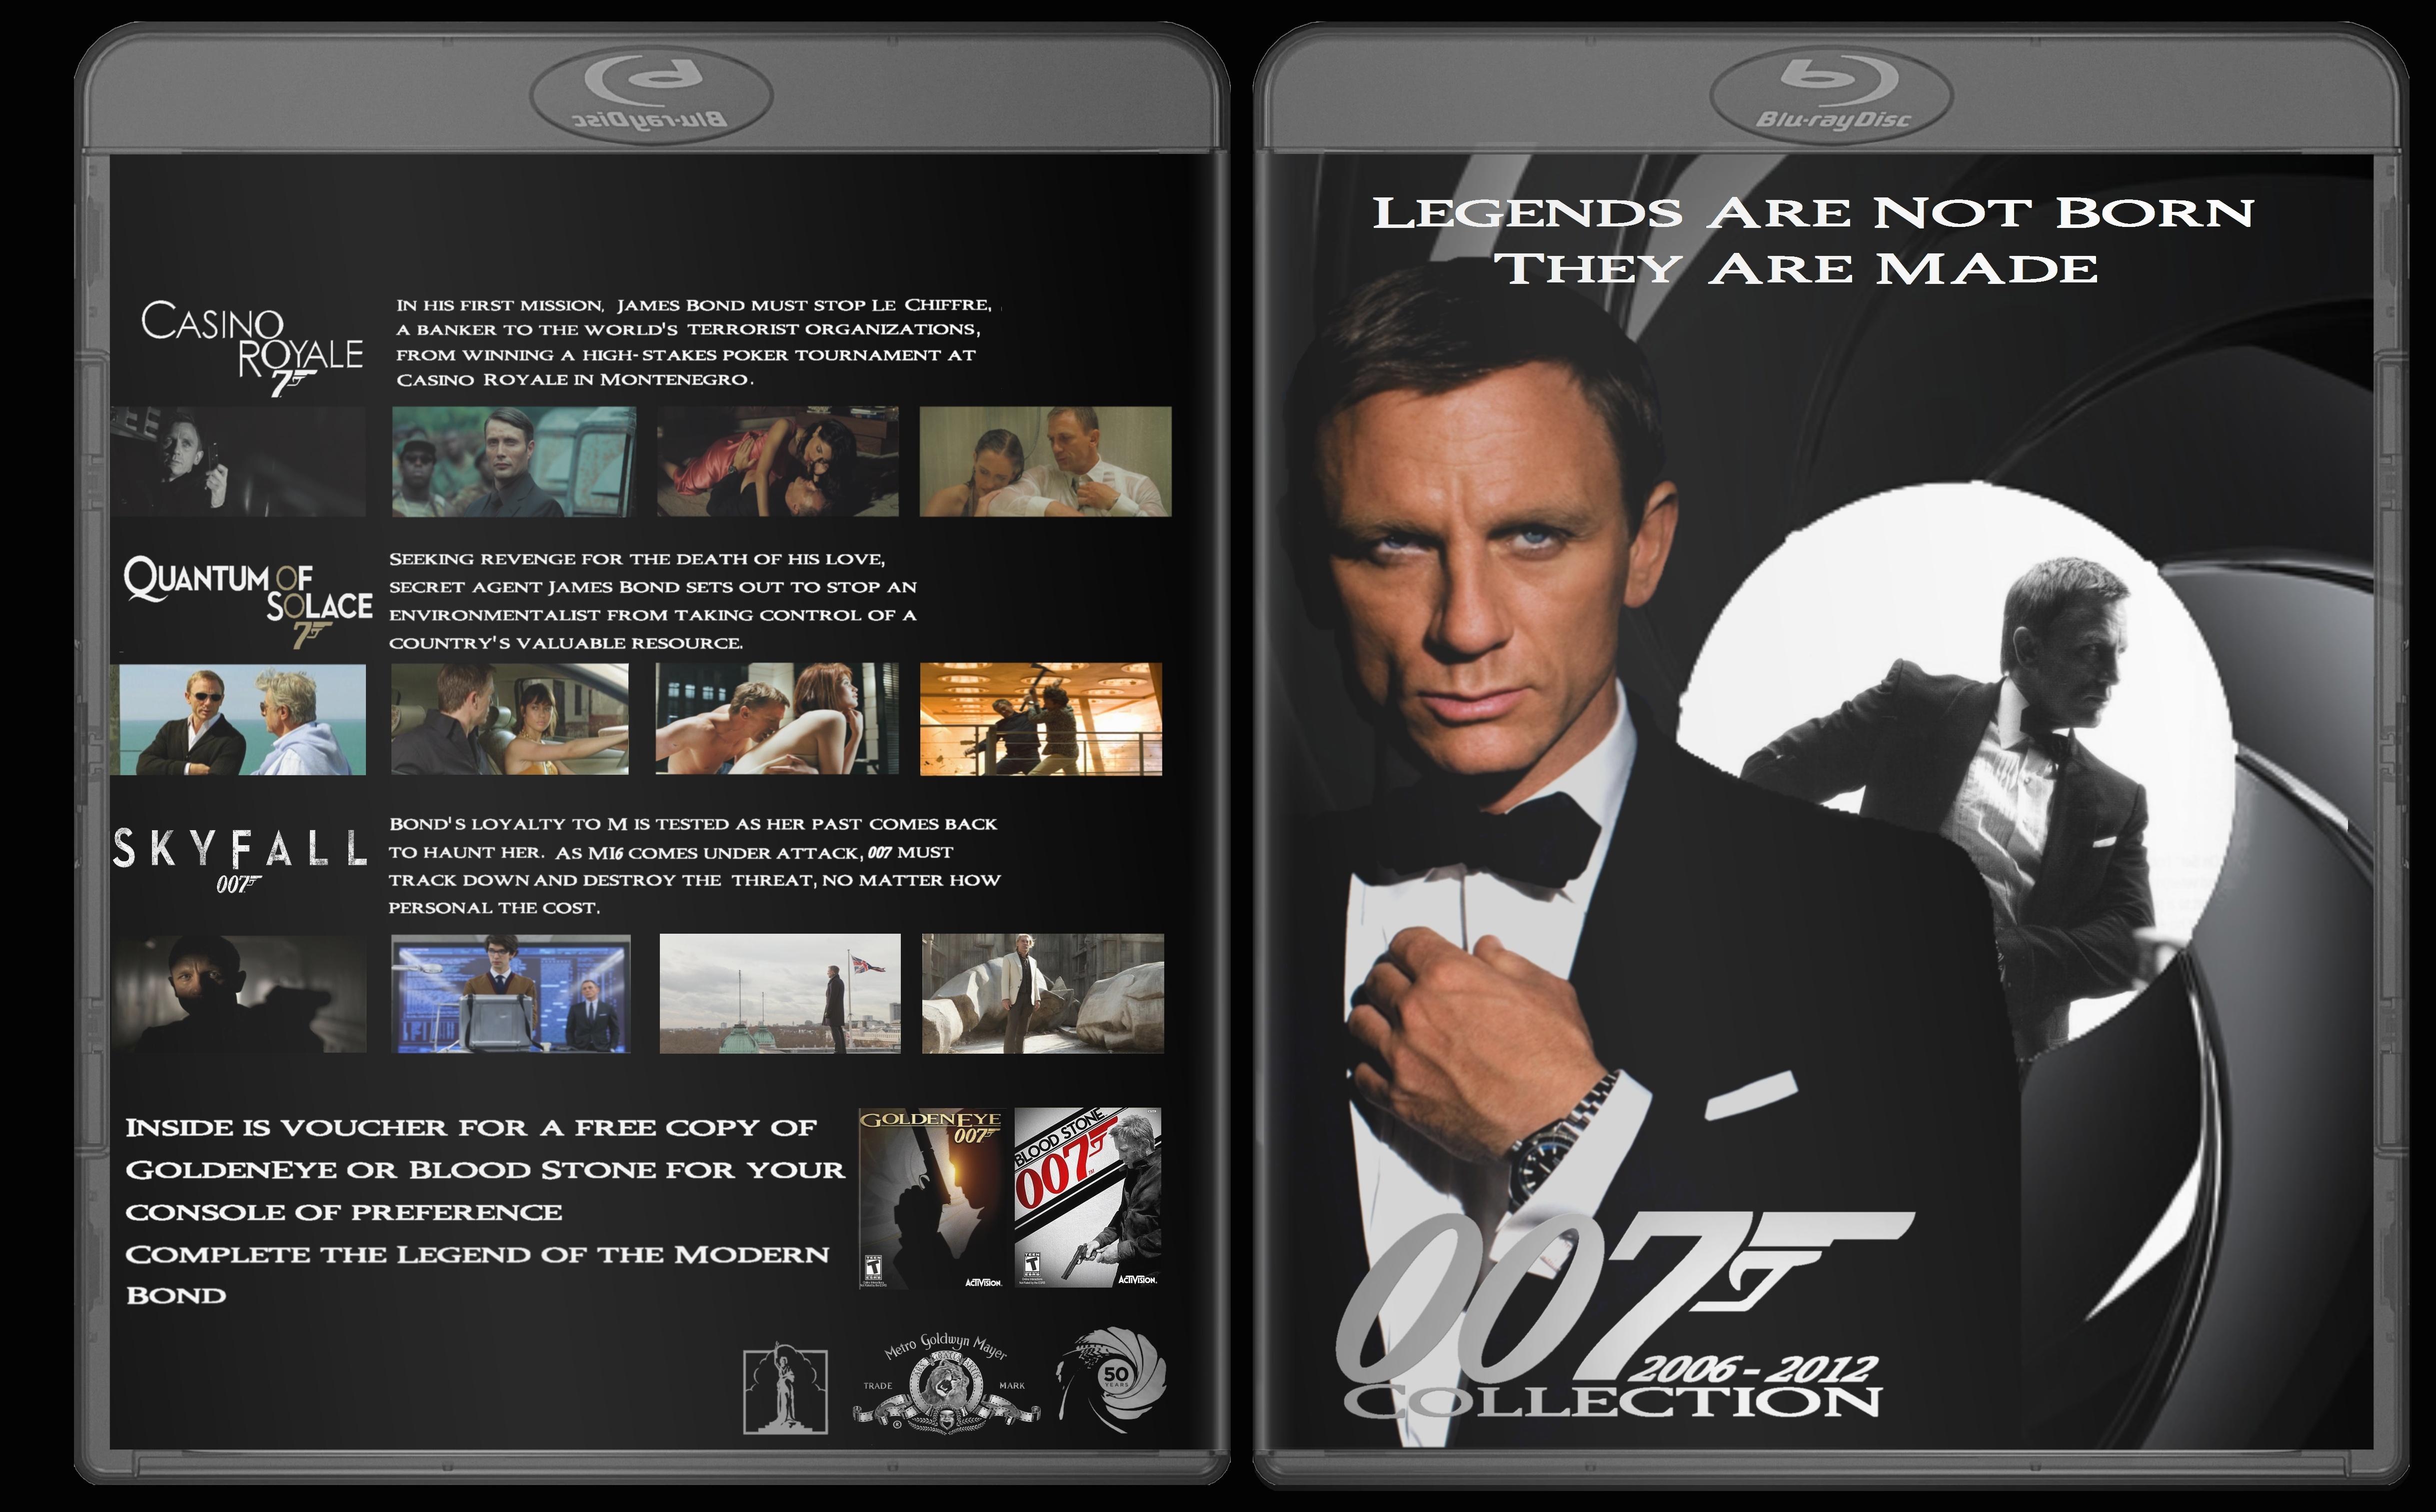 James Bond 007 Collection (2006-2012) box cover